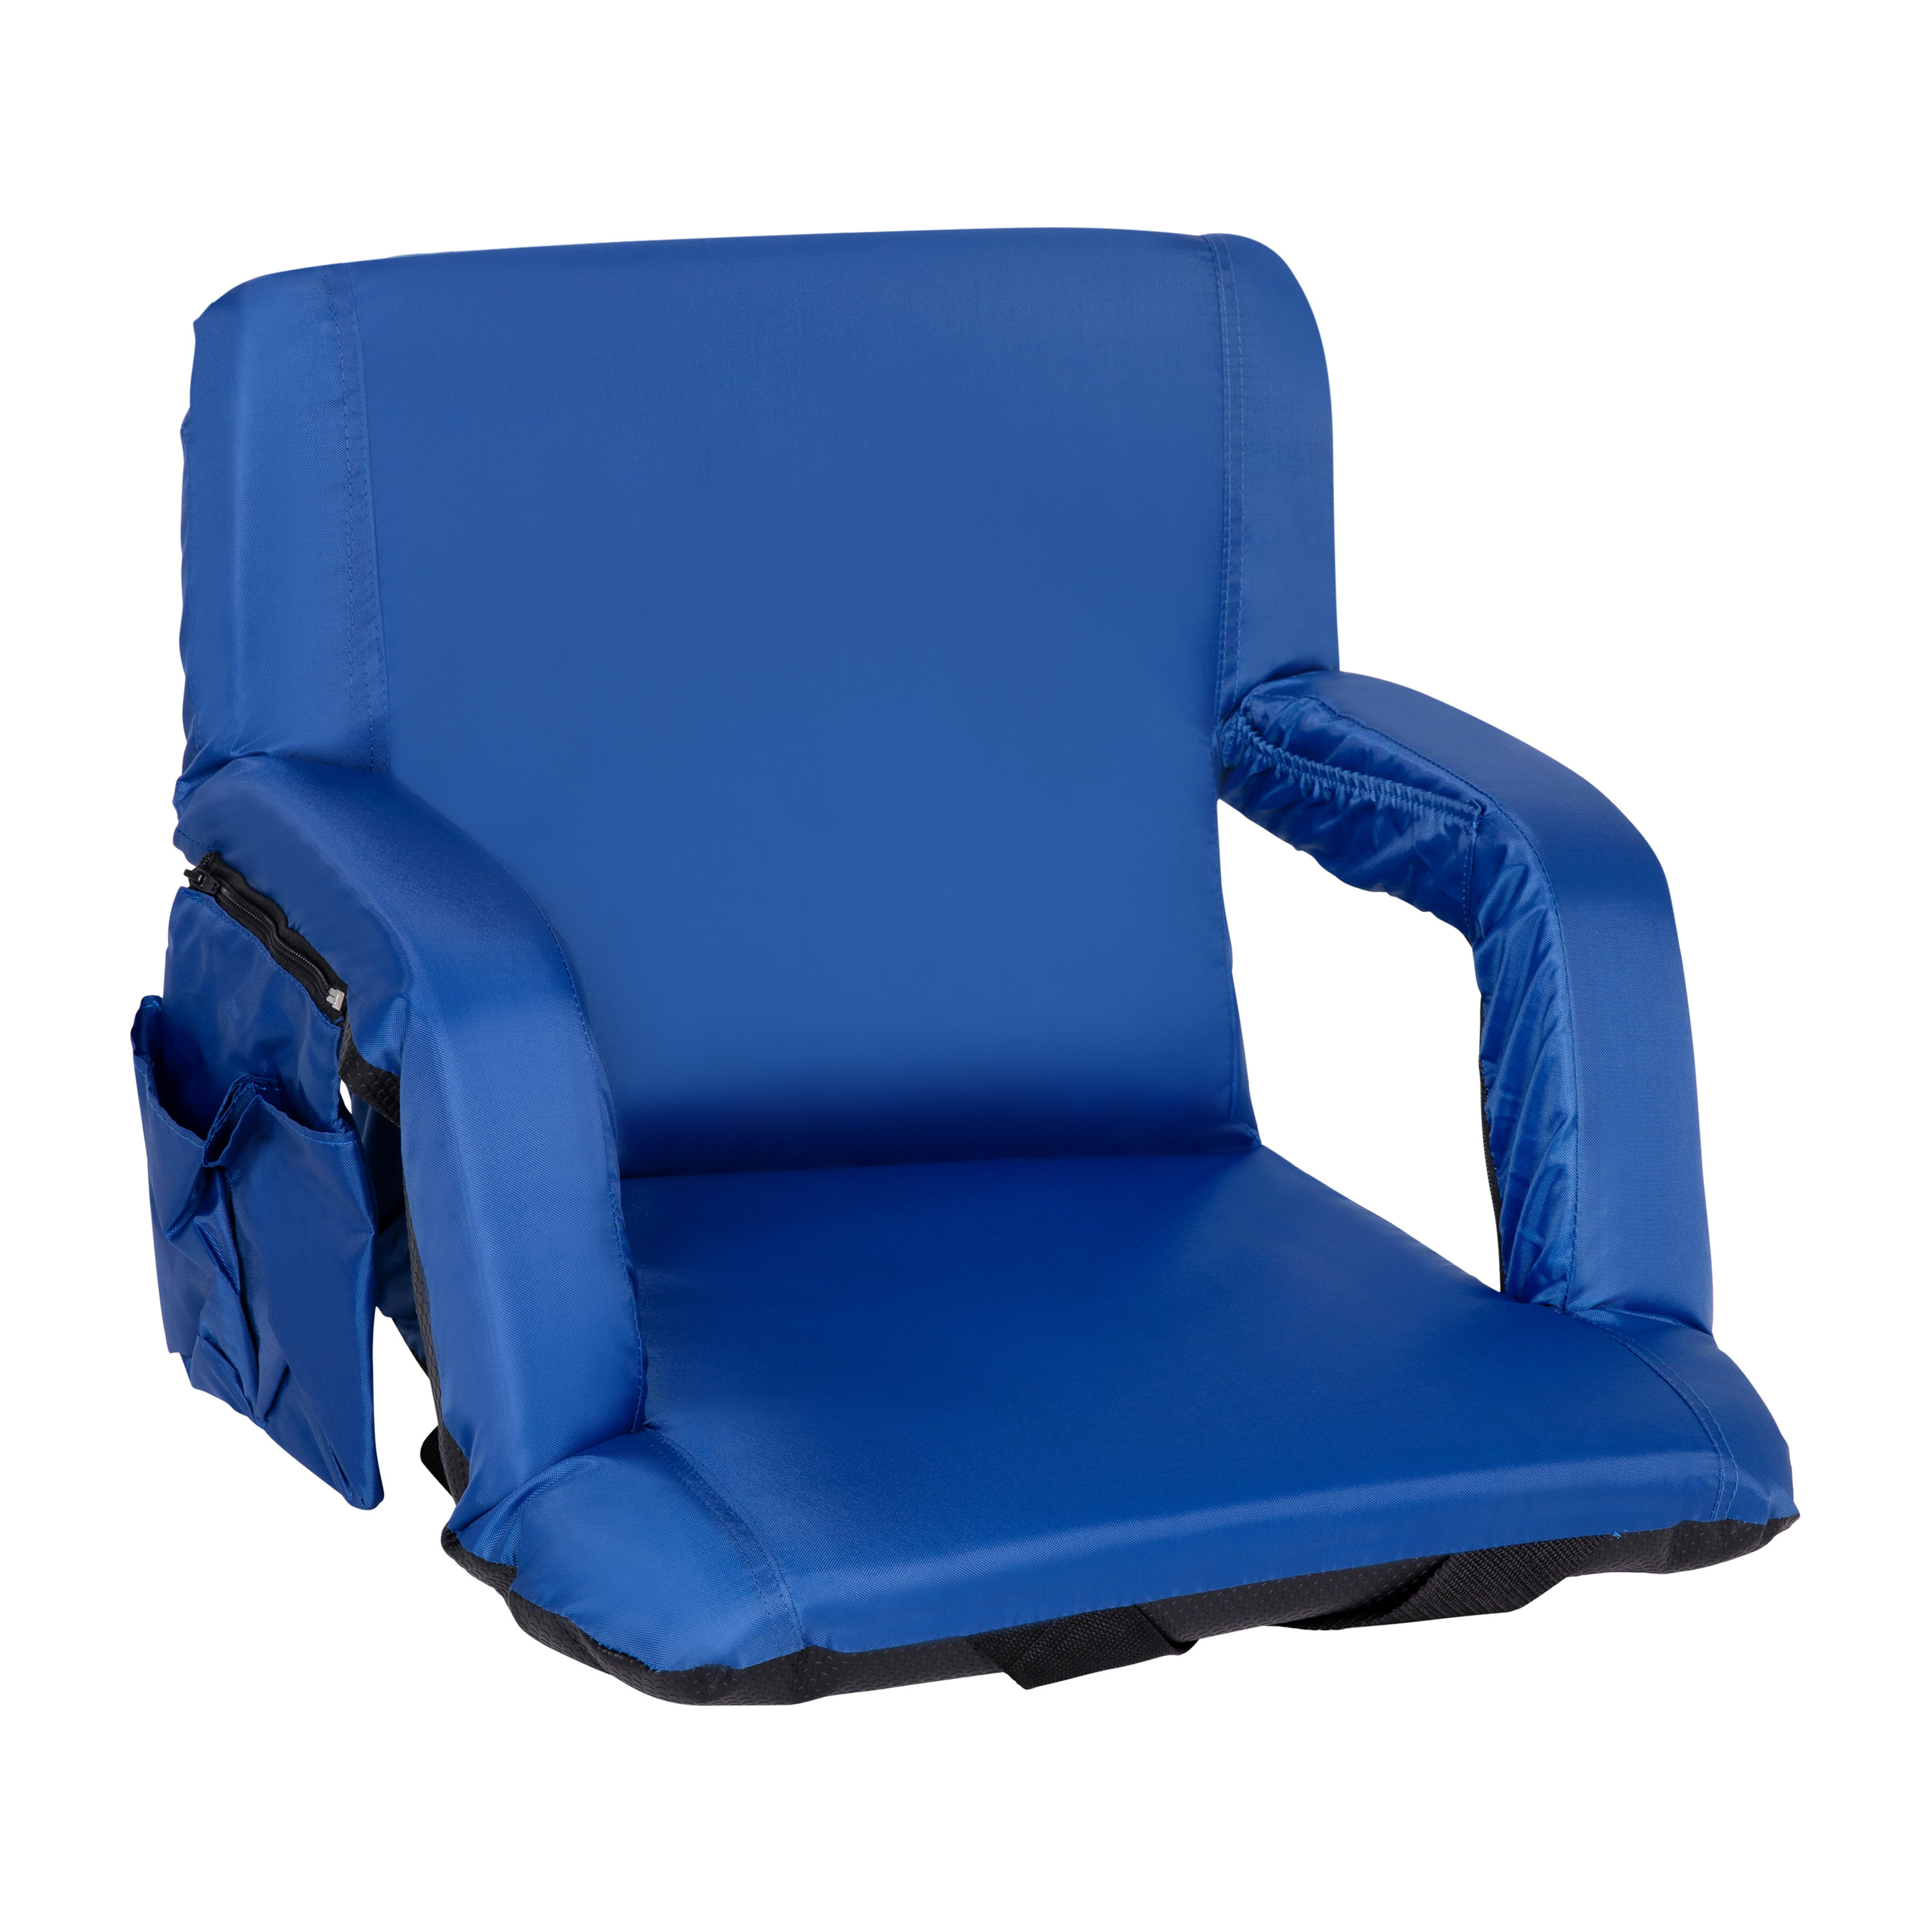 Padded Bleacher Stadium Seat Cushion,best Quality Seat Cushion,made in USA.  